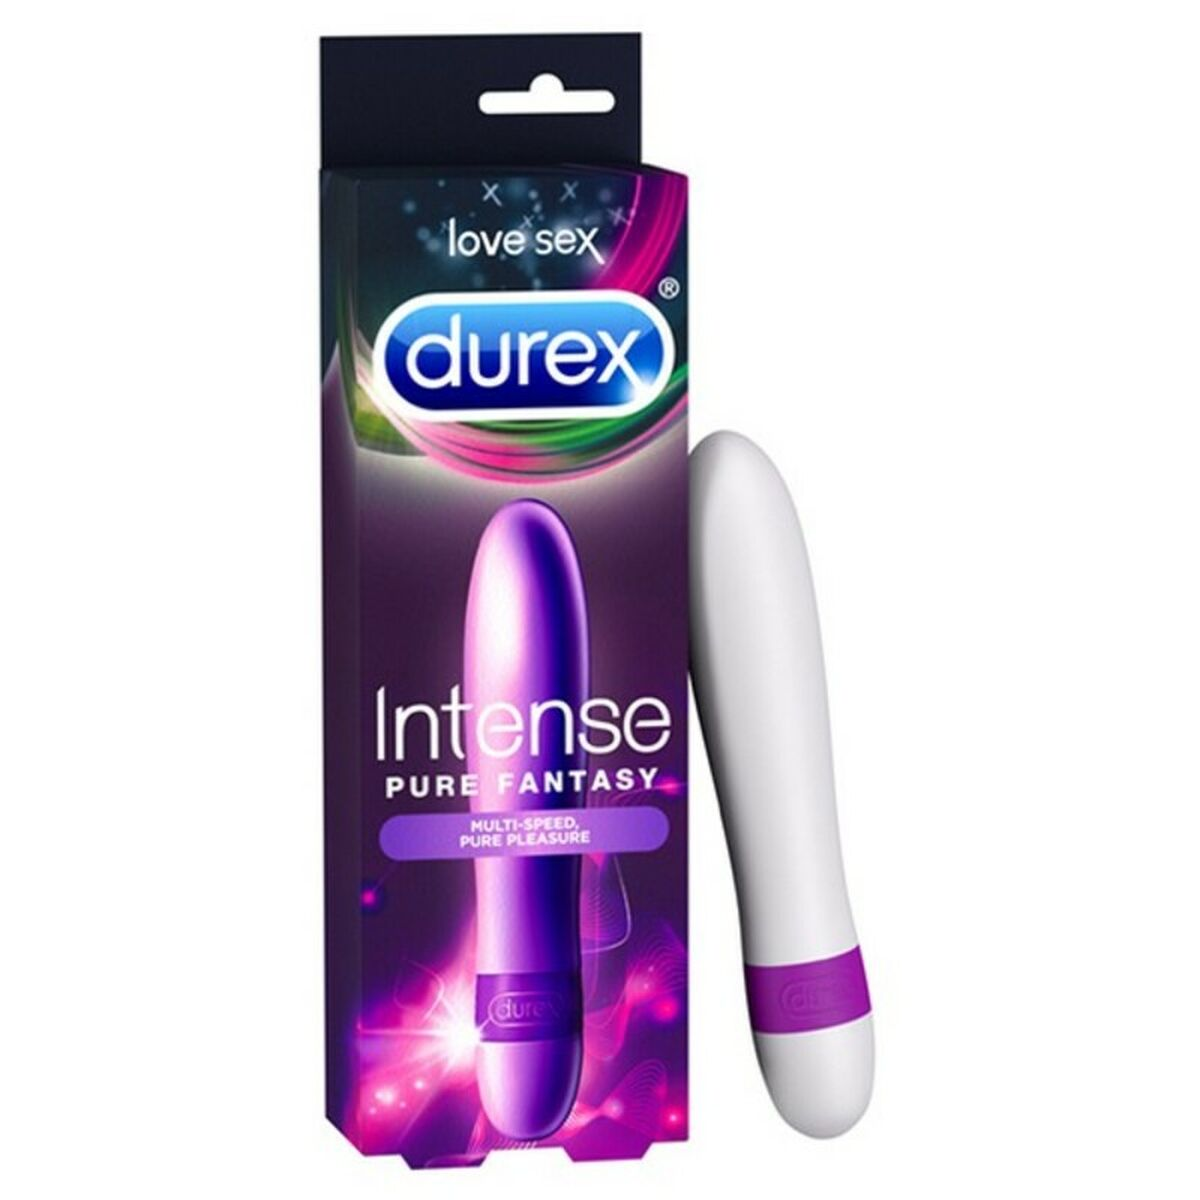 Orgasm\'Intense DUREX Pure Vibrator Durex Fantasy mini-vibratoren